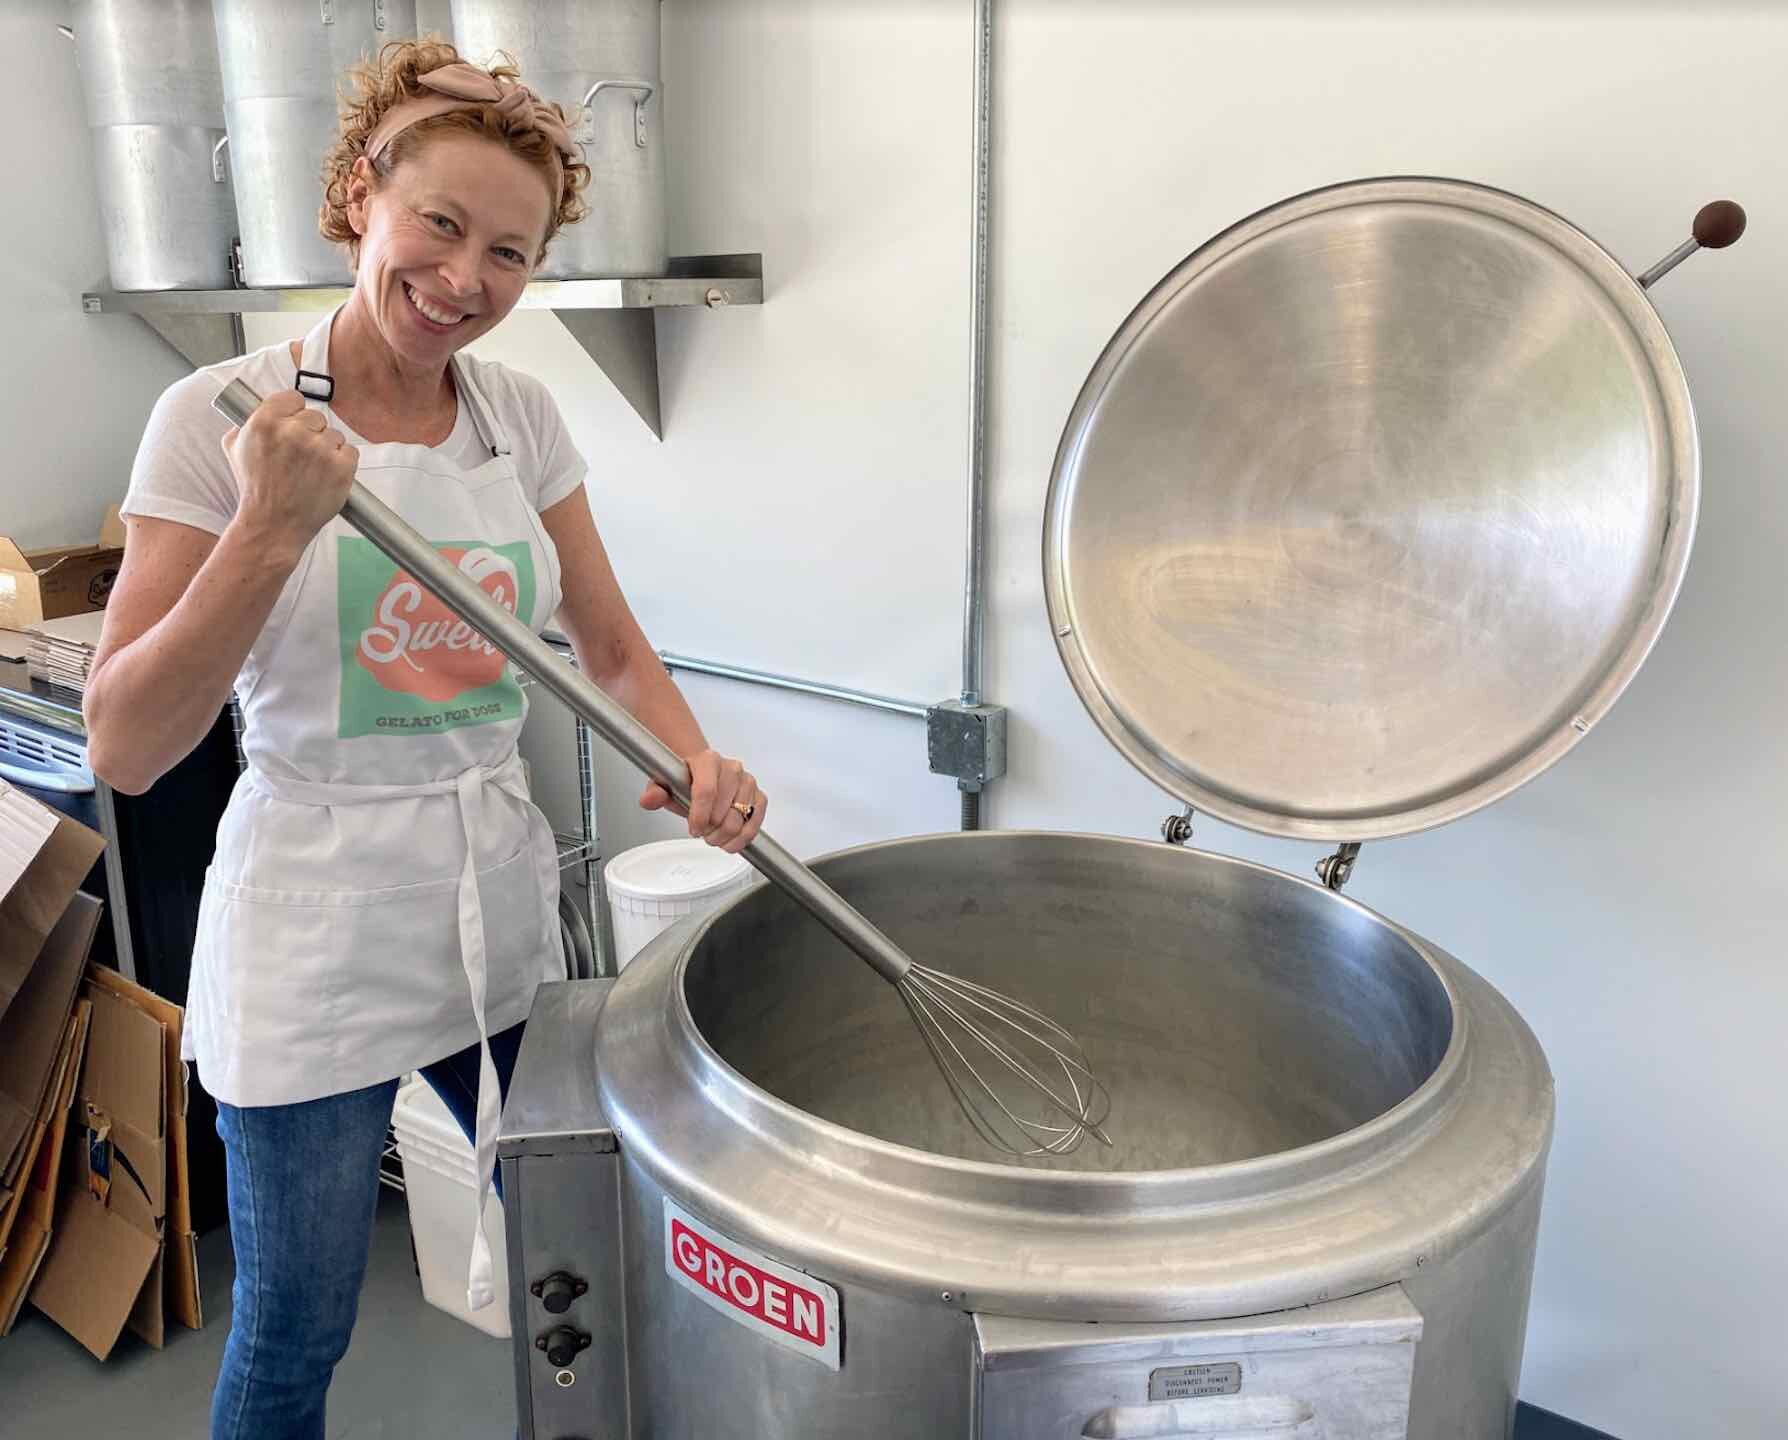 Debbie Hendrickx prepares to stir up a new batch of gelato